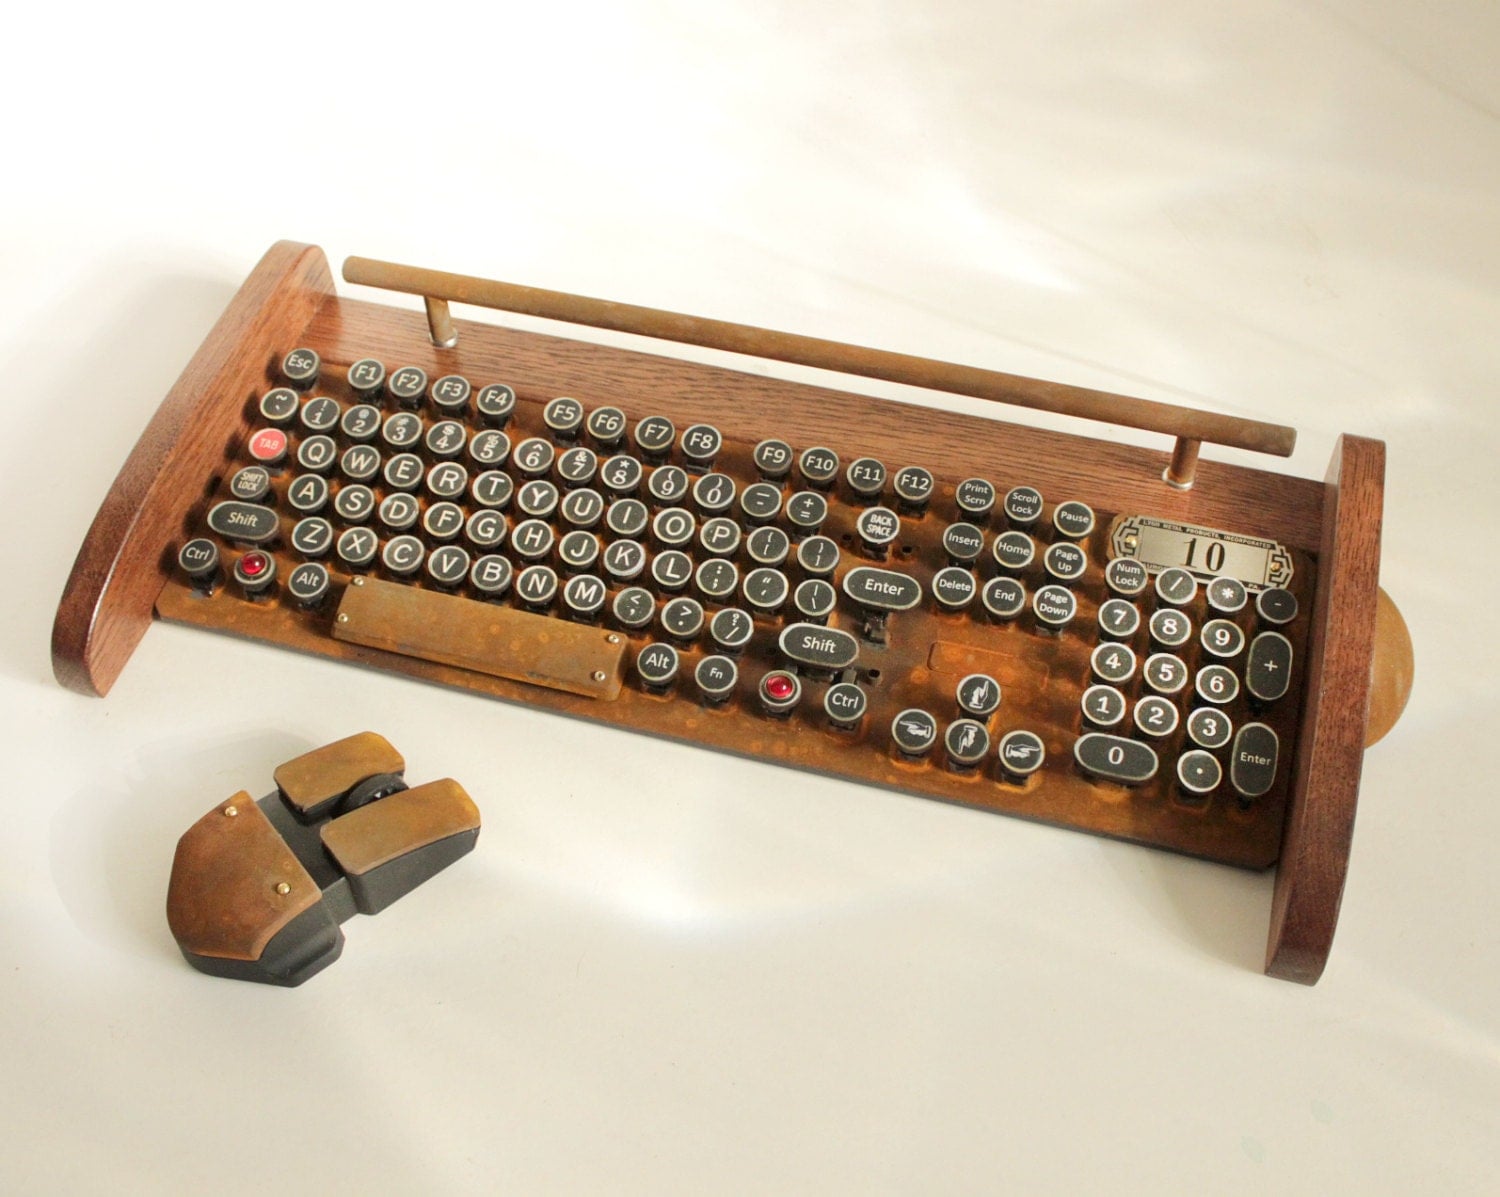 vintage typewriter keyboard for computers